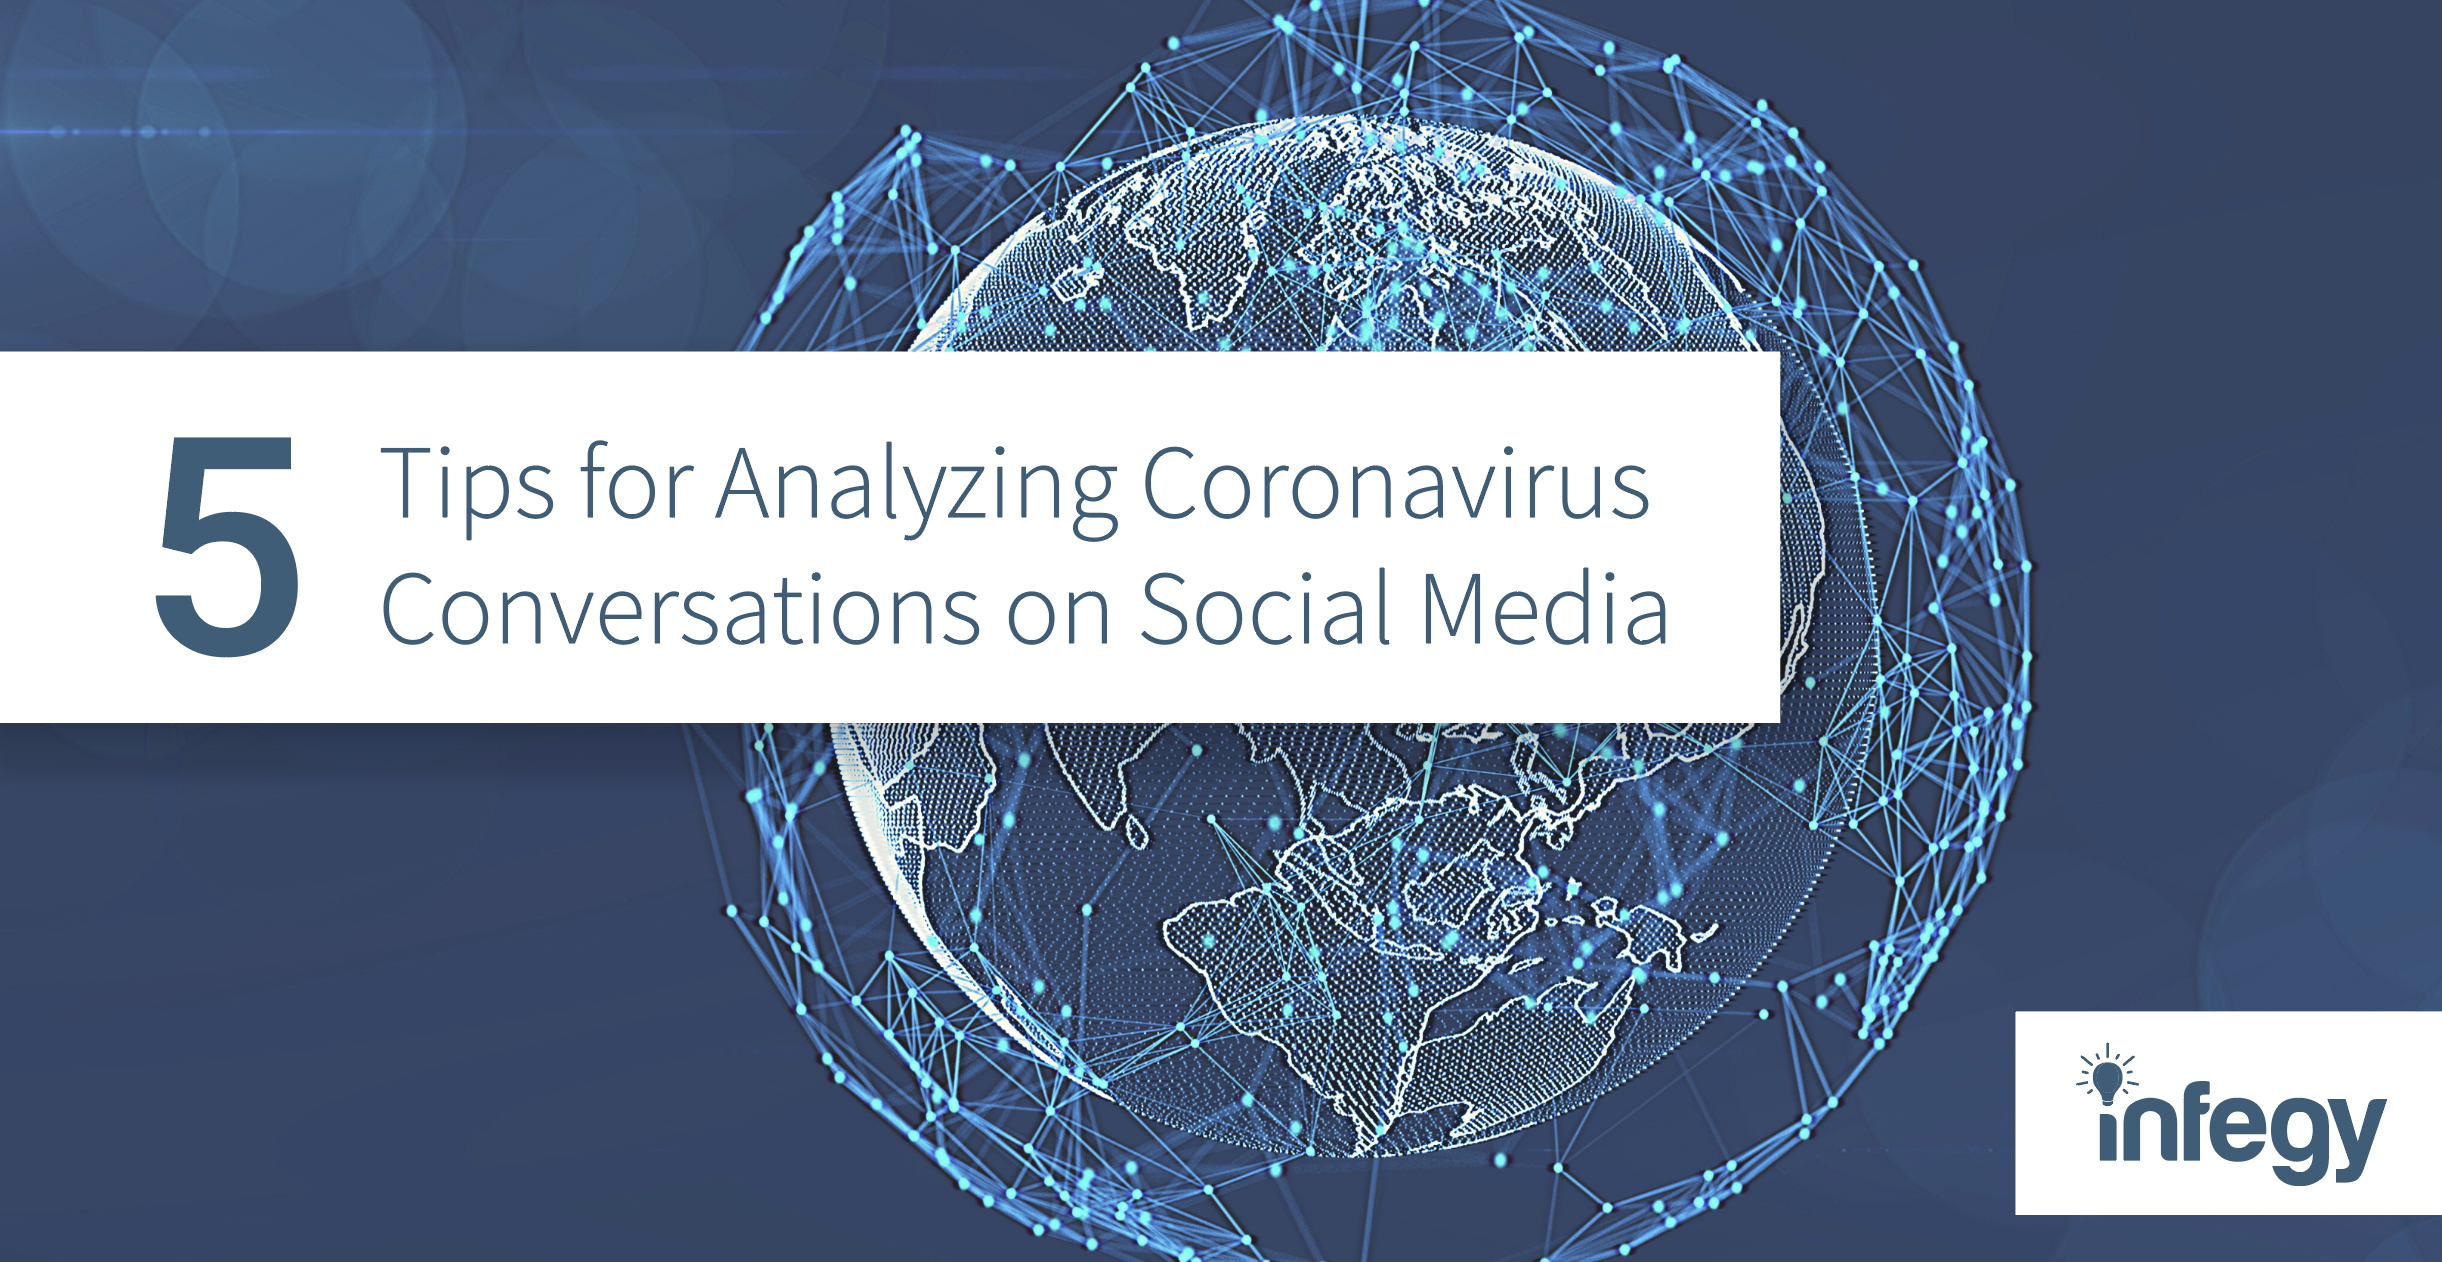 5 Tips for Analyzing Coronavirus Conversations on Social Media